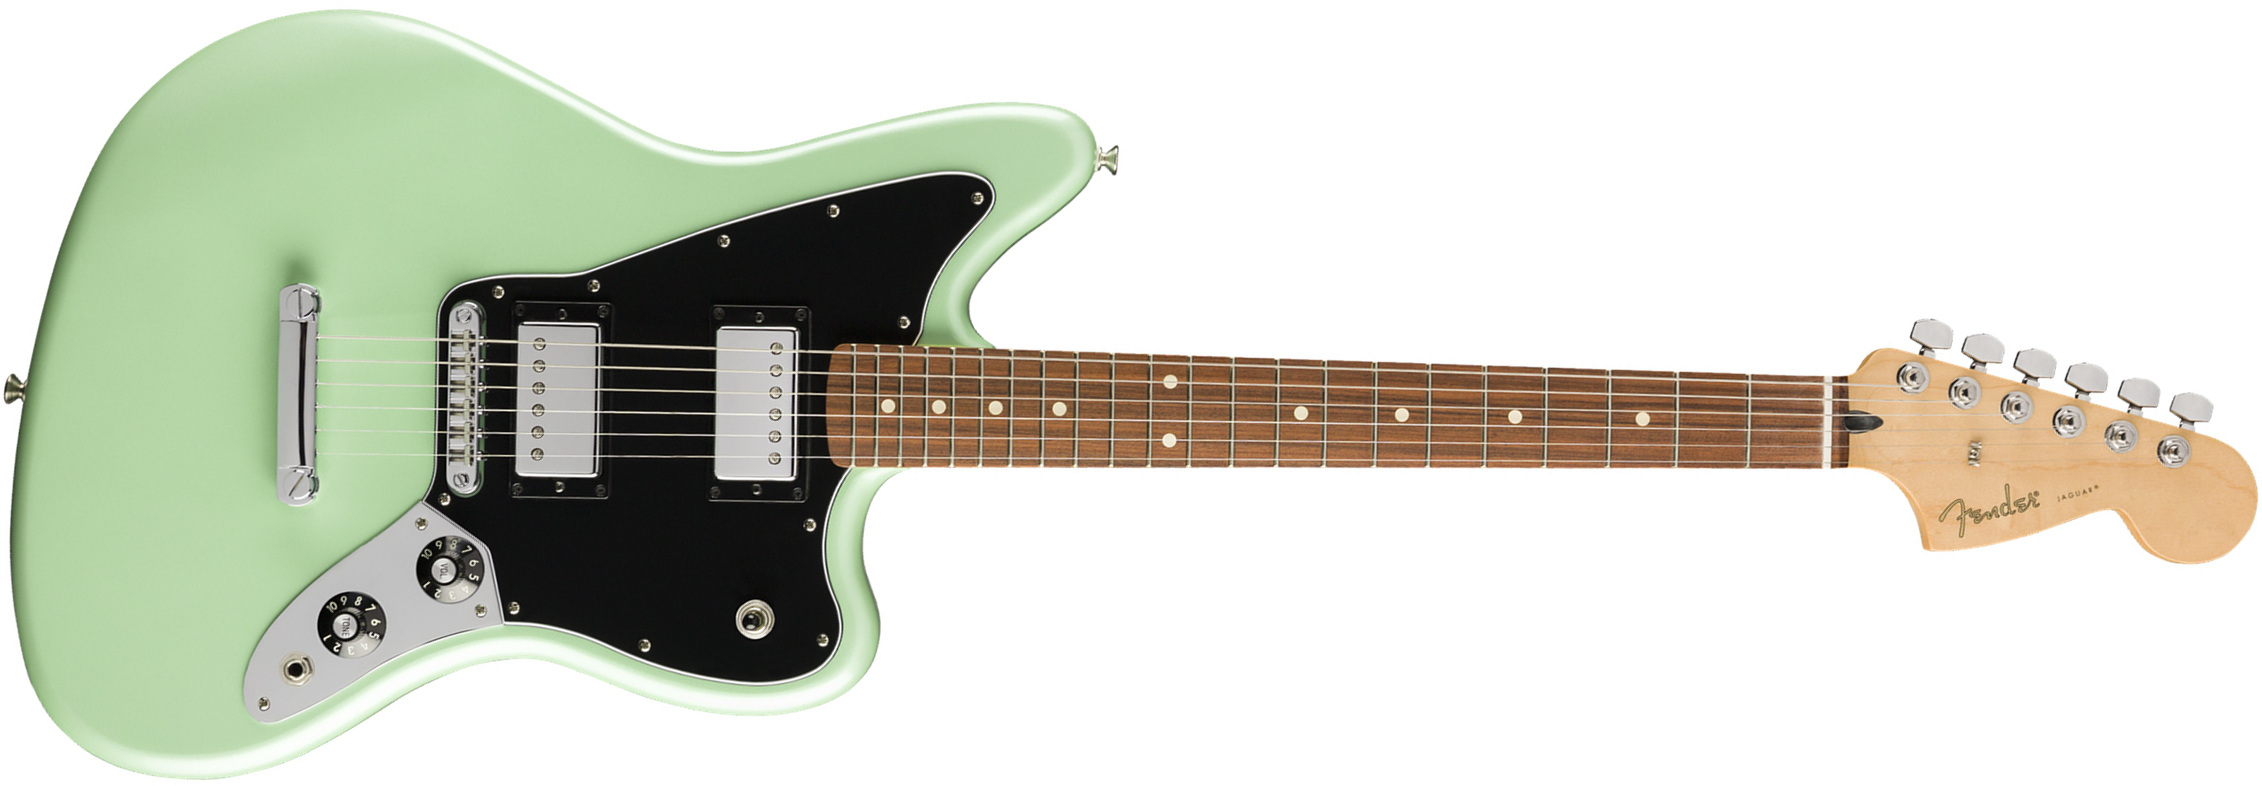 Fender Jaguar Hh Special Edition Player Fsr Mex 2h Ht Pf - Surf Pearl - Guitarra electrica retro rock - Main picture